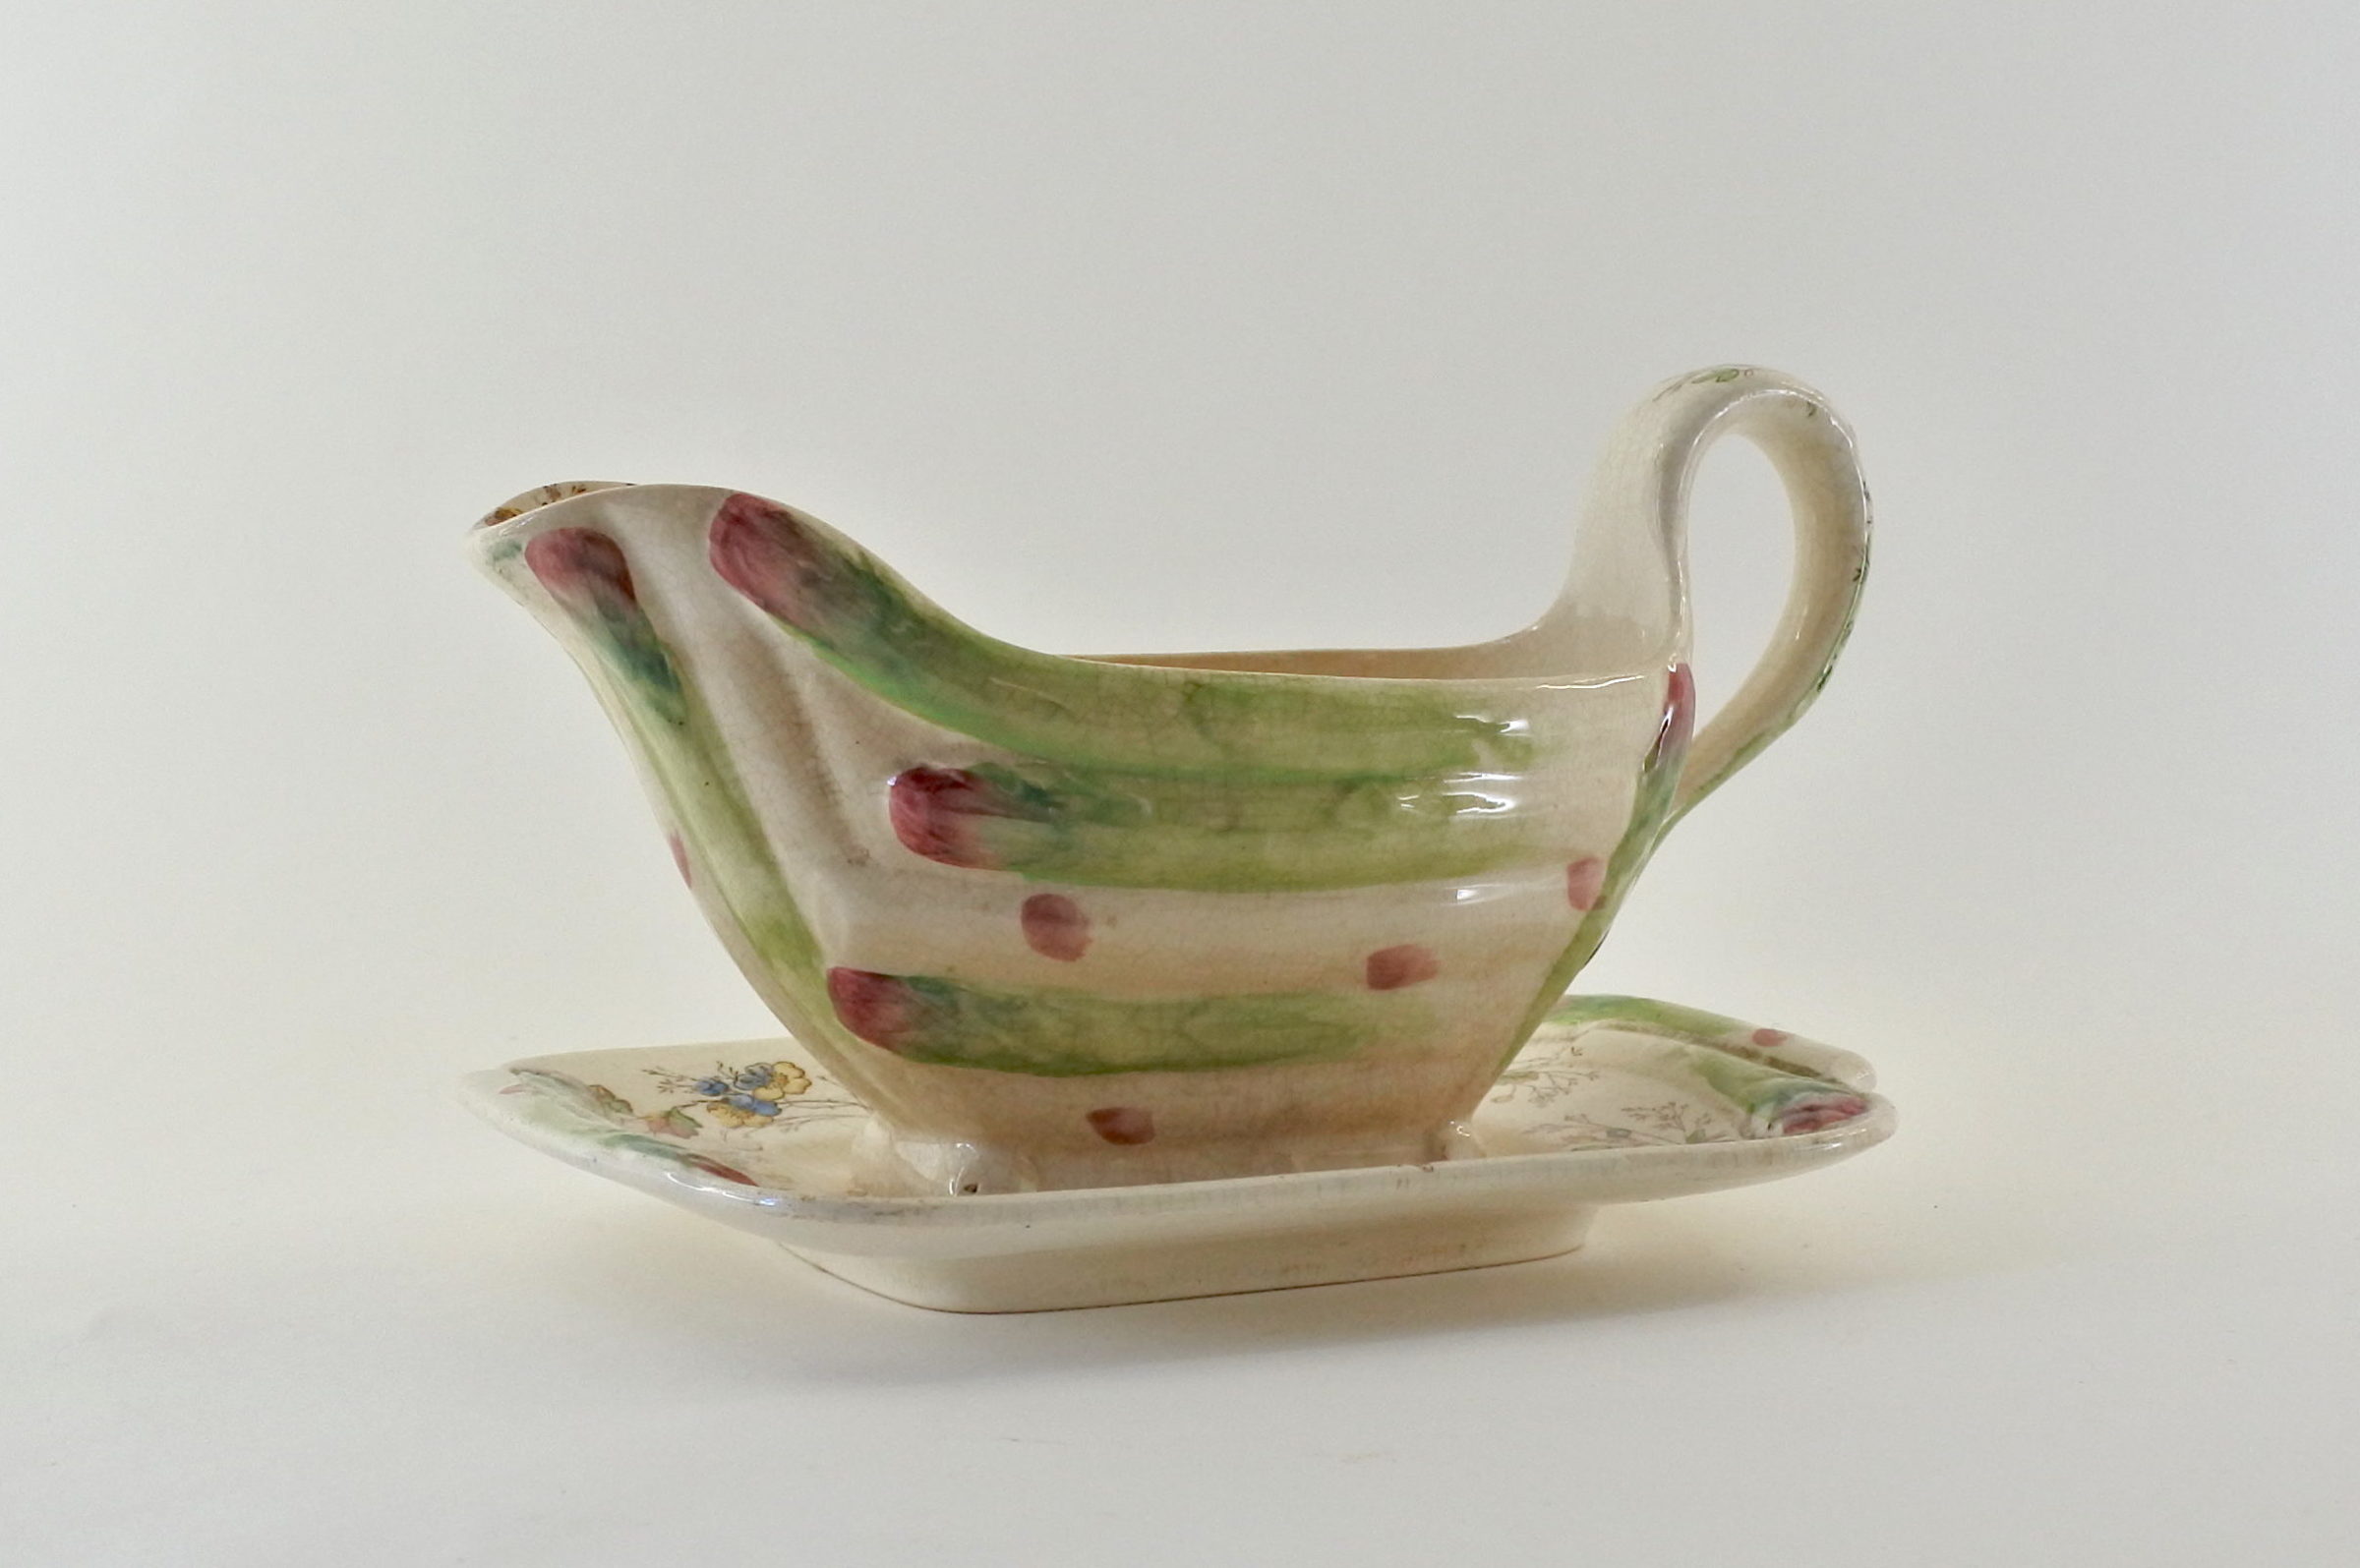 Salsiera in ceramica barbotine - William A. Adderley & Co